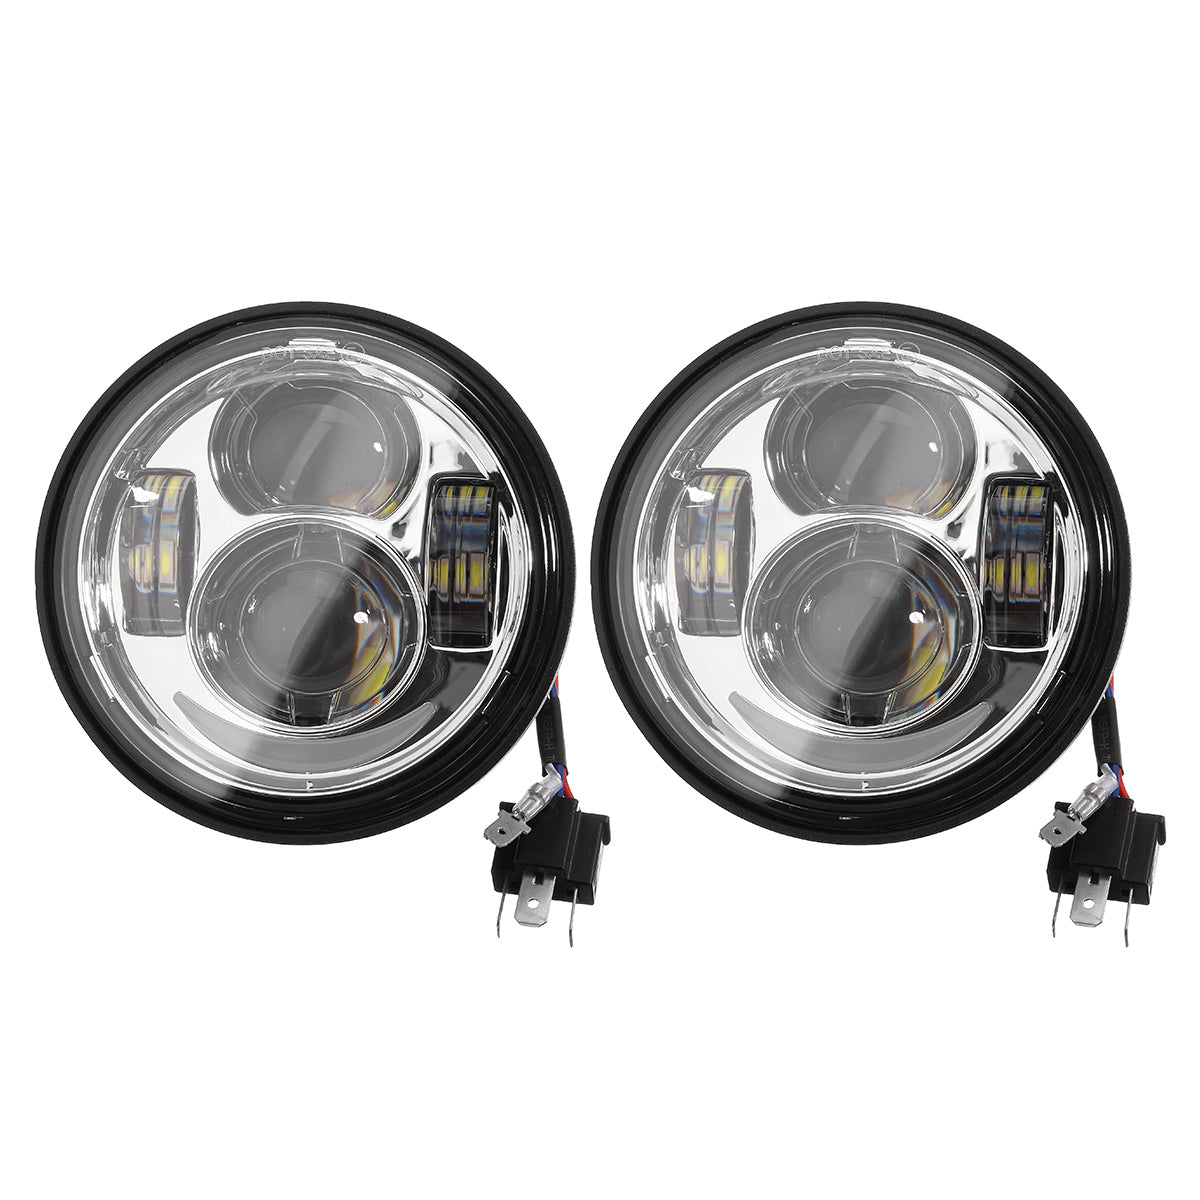 Dim Gray 4.65inch LED HI/LO Headlights Lamp For Harley Dyna Fat Bob 2008-2016